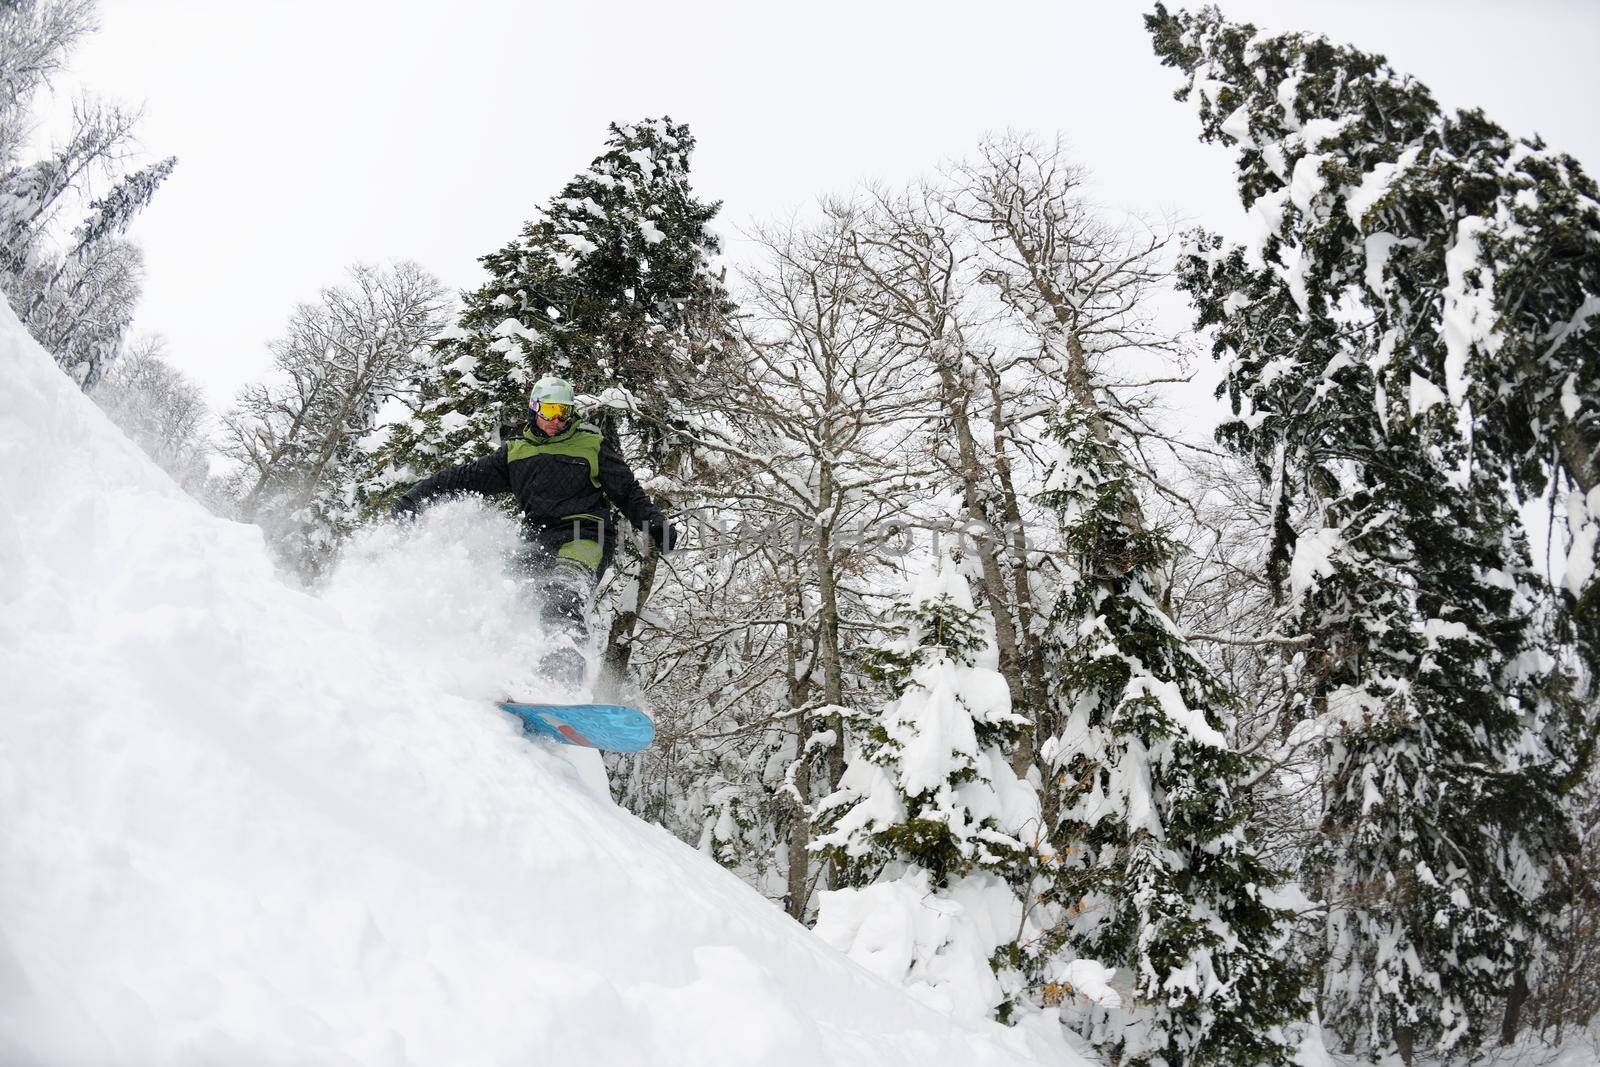 snowboarder on fresh deep snow by dotshock